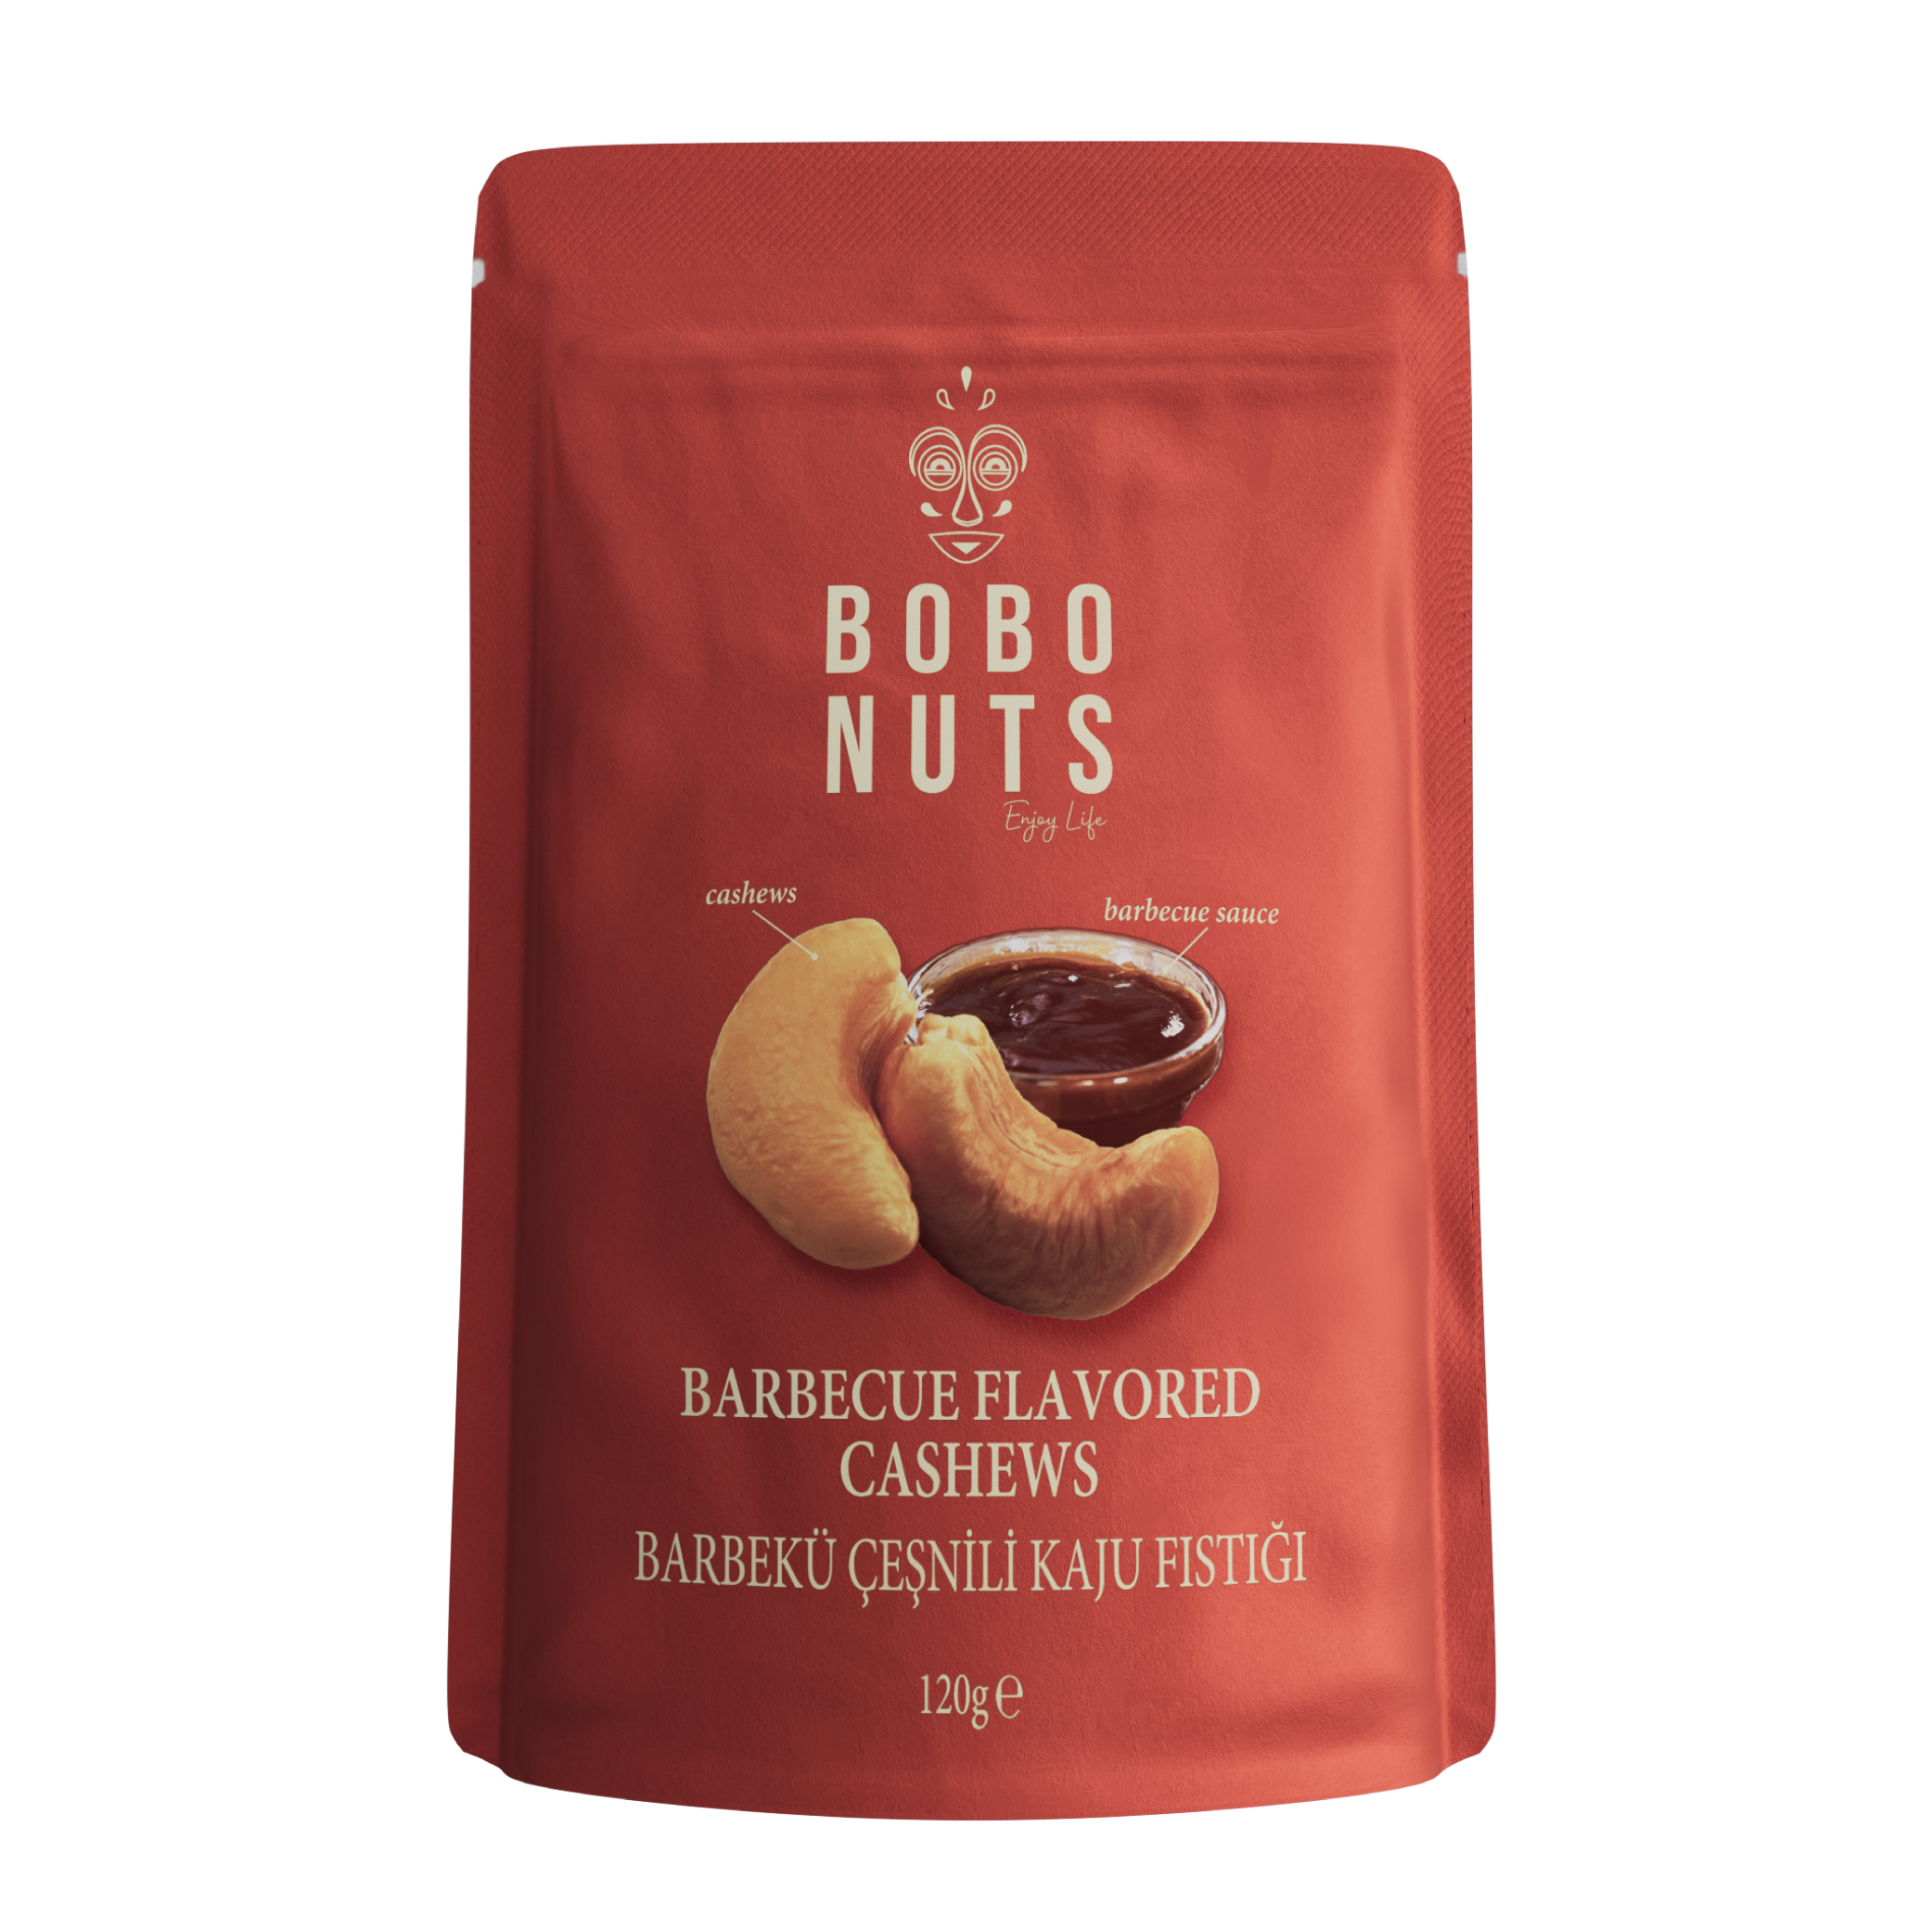 Bobo Nuts Barbekü Çeşnili Kaju Fıstığı 120g